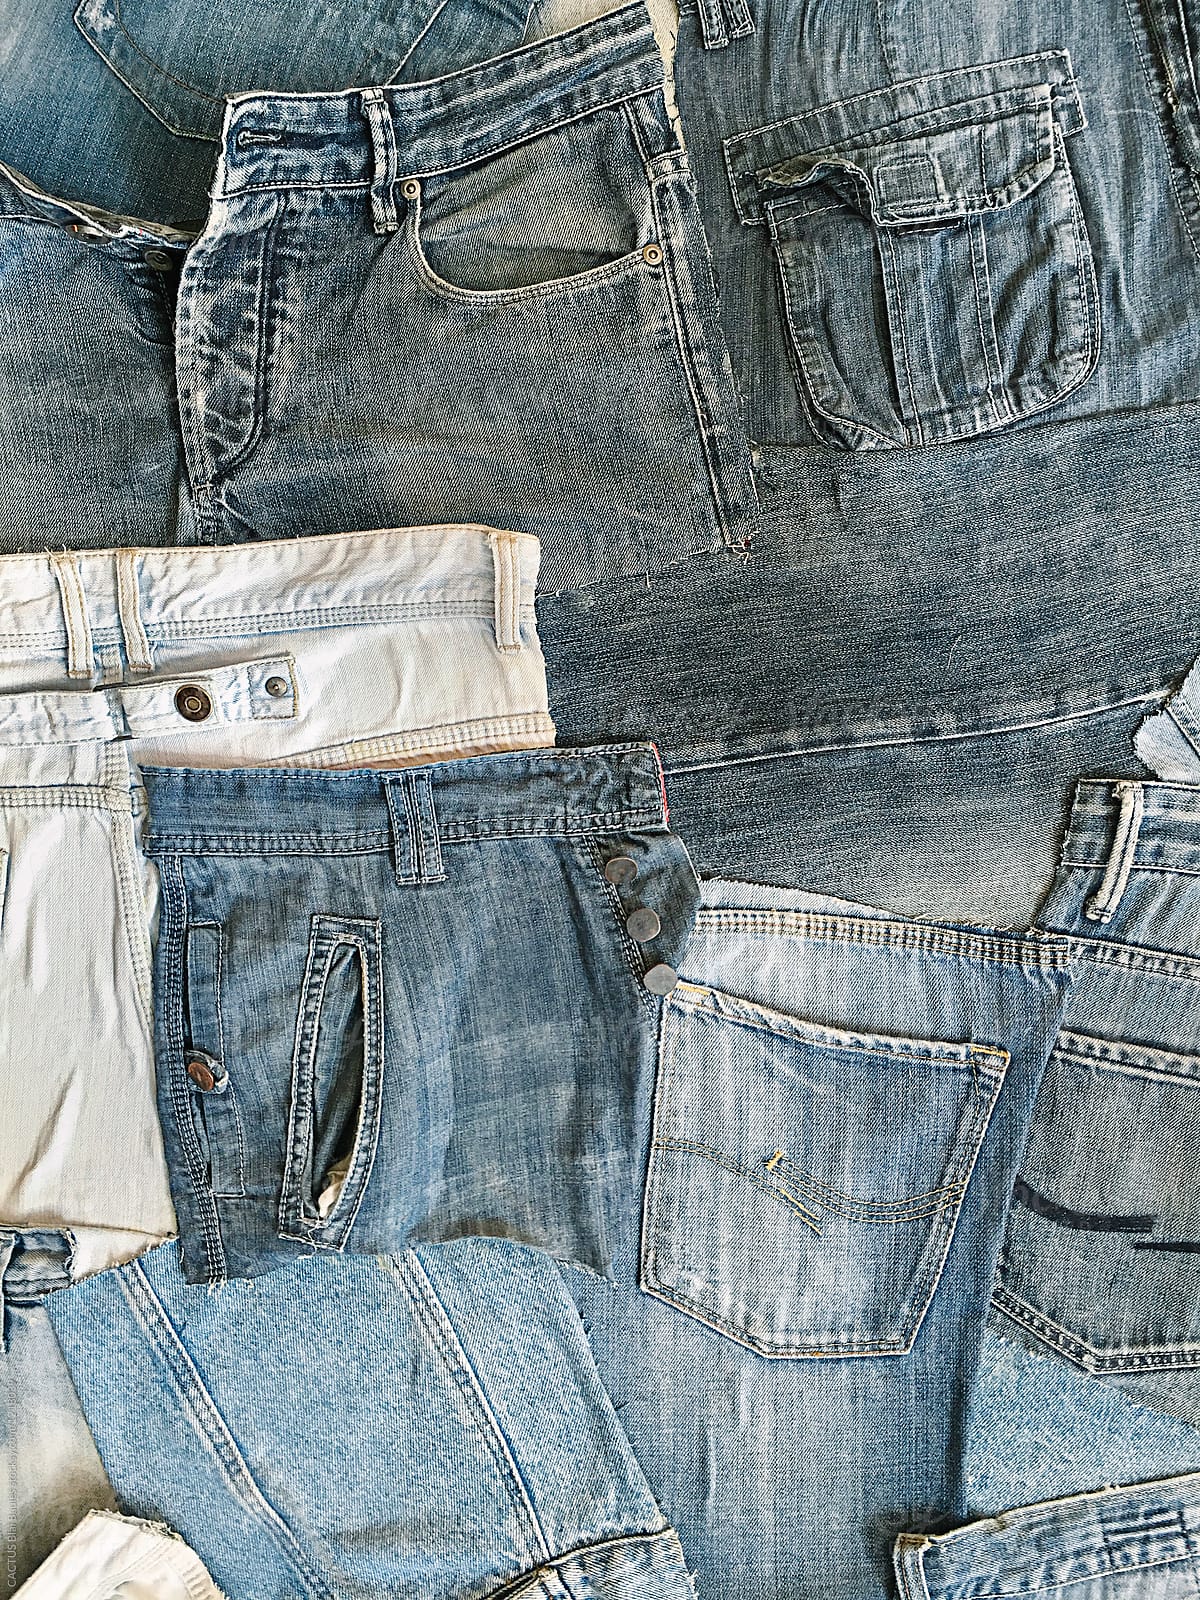 Denim Jeans texture